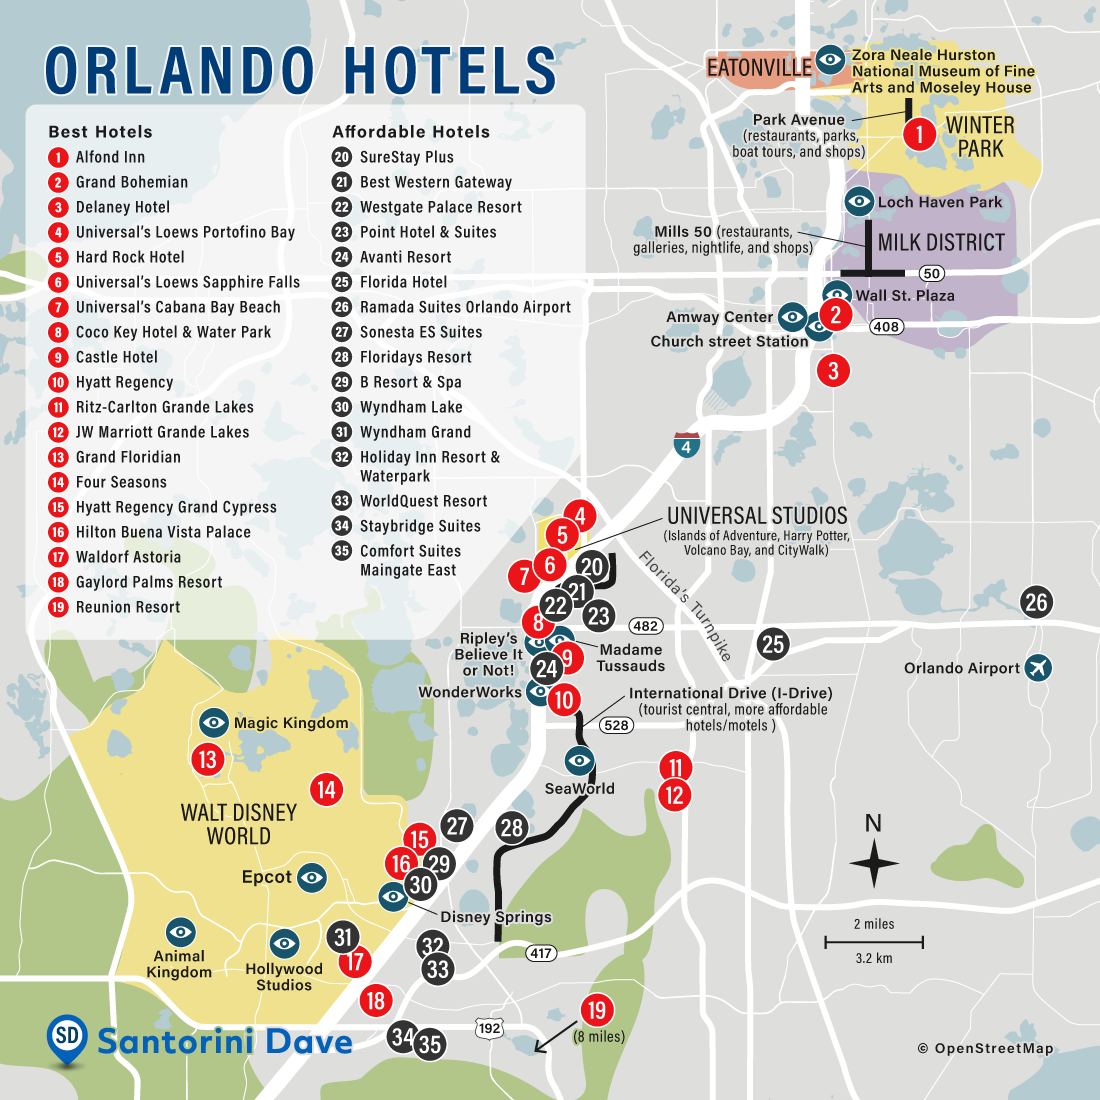 Map of Orlando Hotels and Neighborhoods